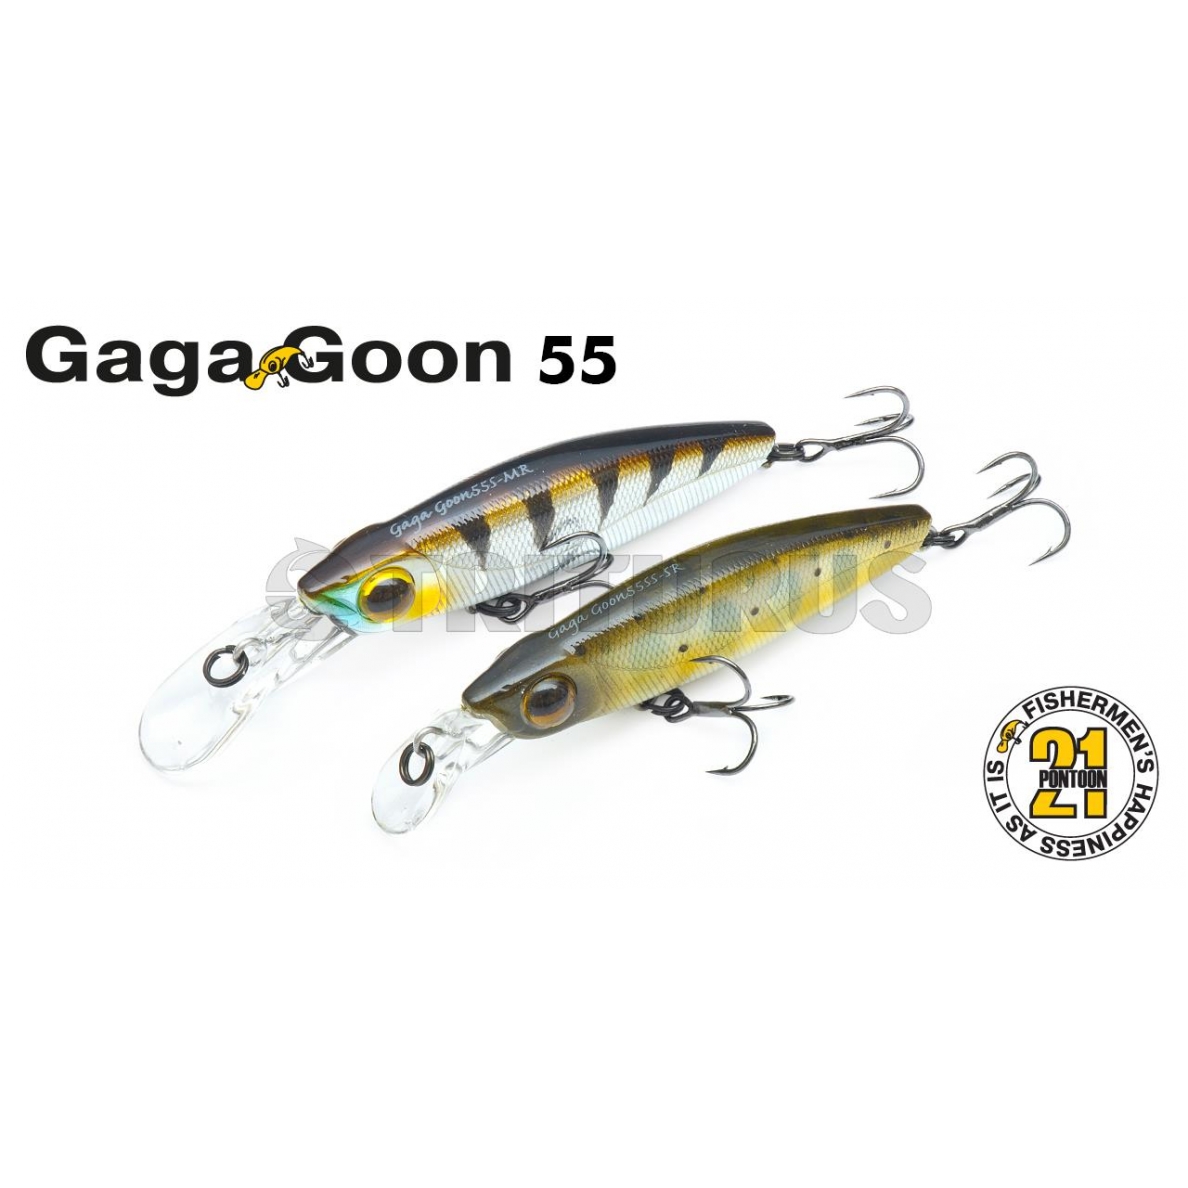 Pontoon 21 GagaGoon 55S-MR fishing lures original assortment of colors